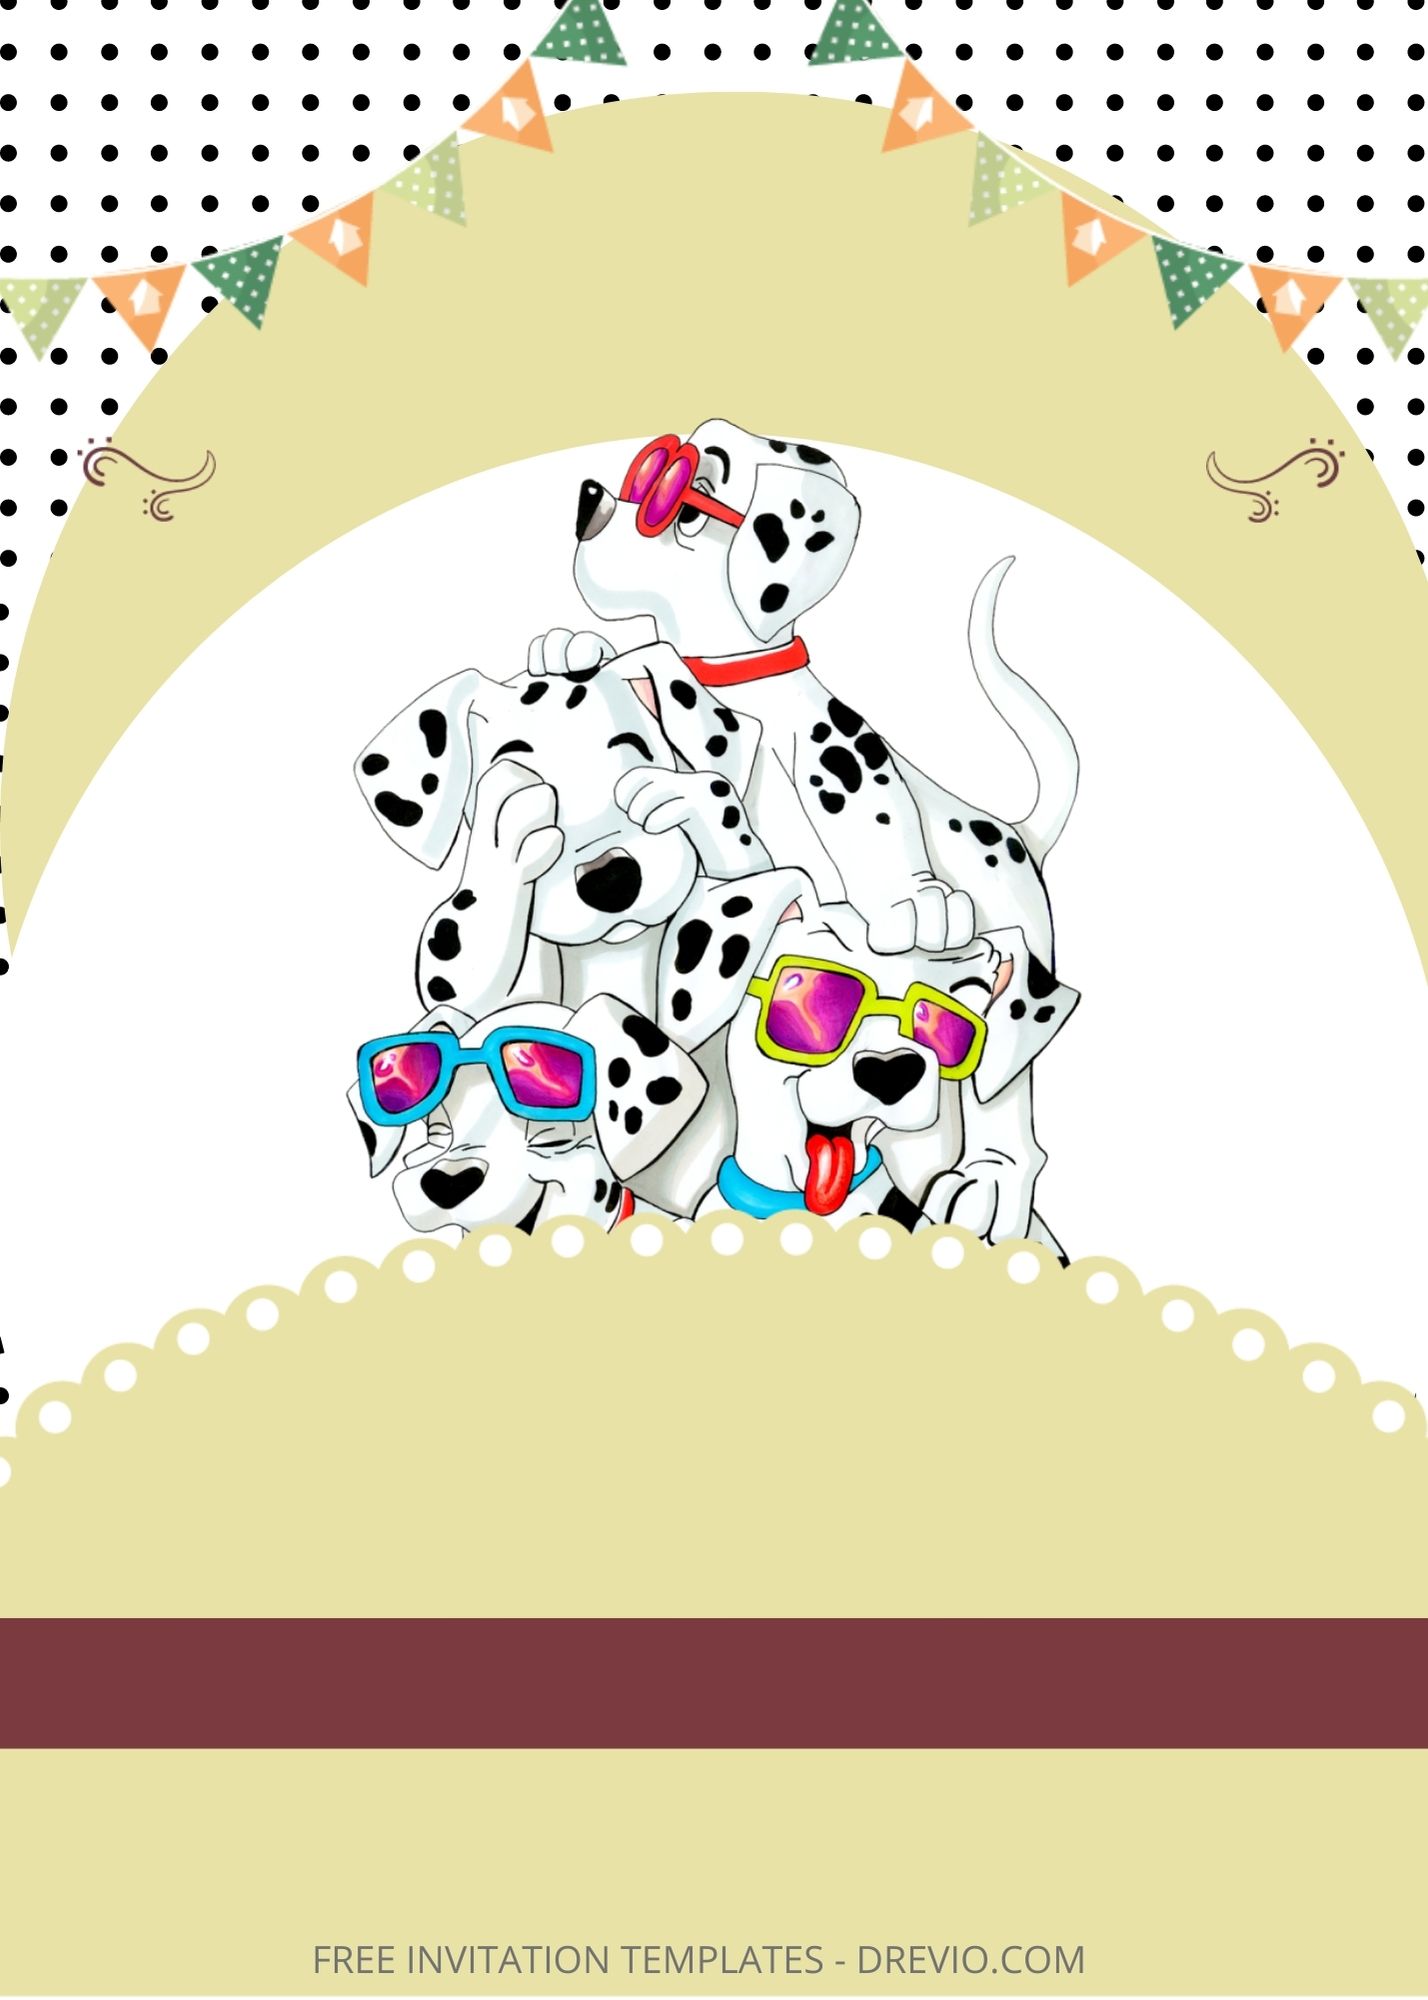 Blank Get Together Dalmatian Canva Birthday Invitation Templates Ten